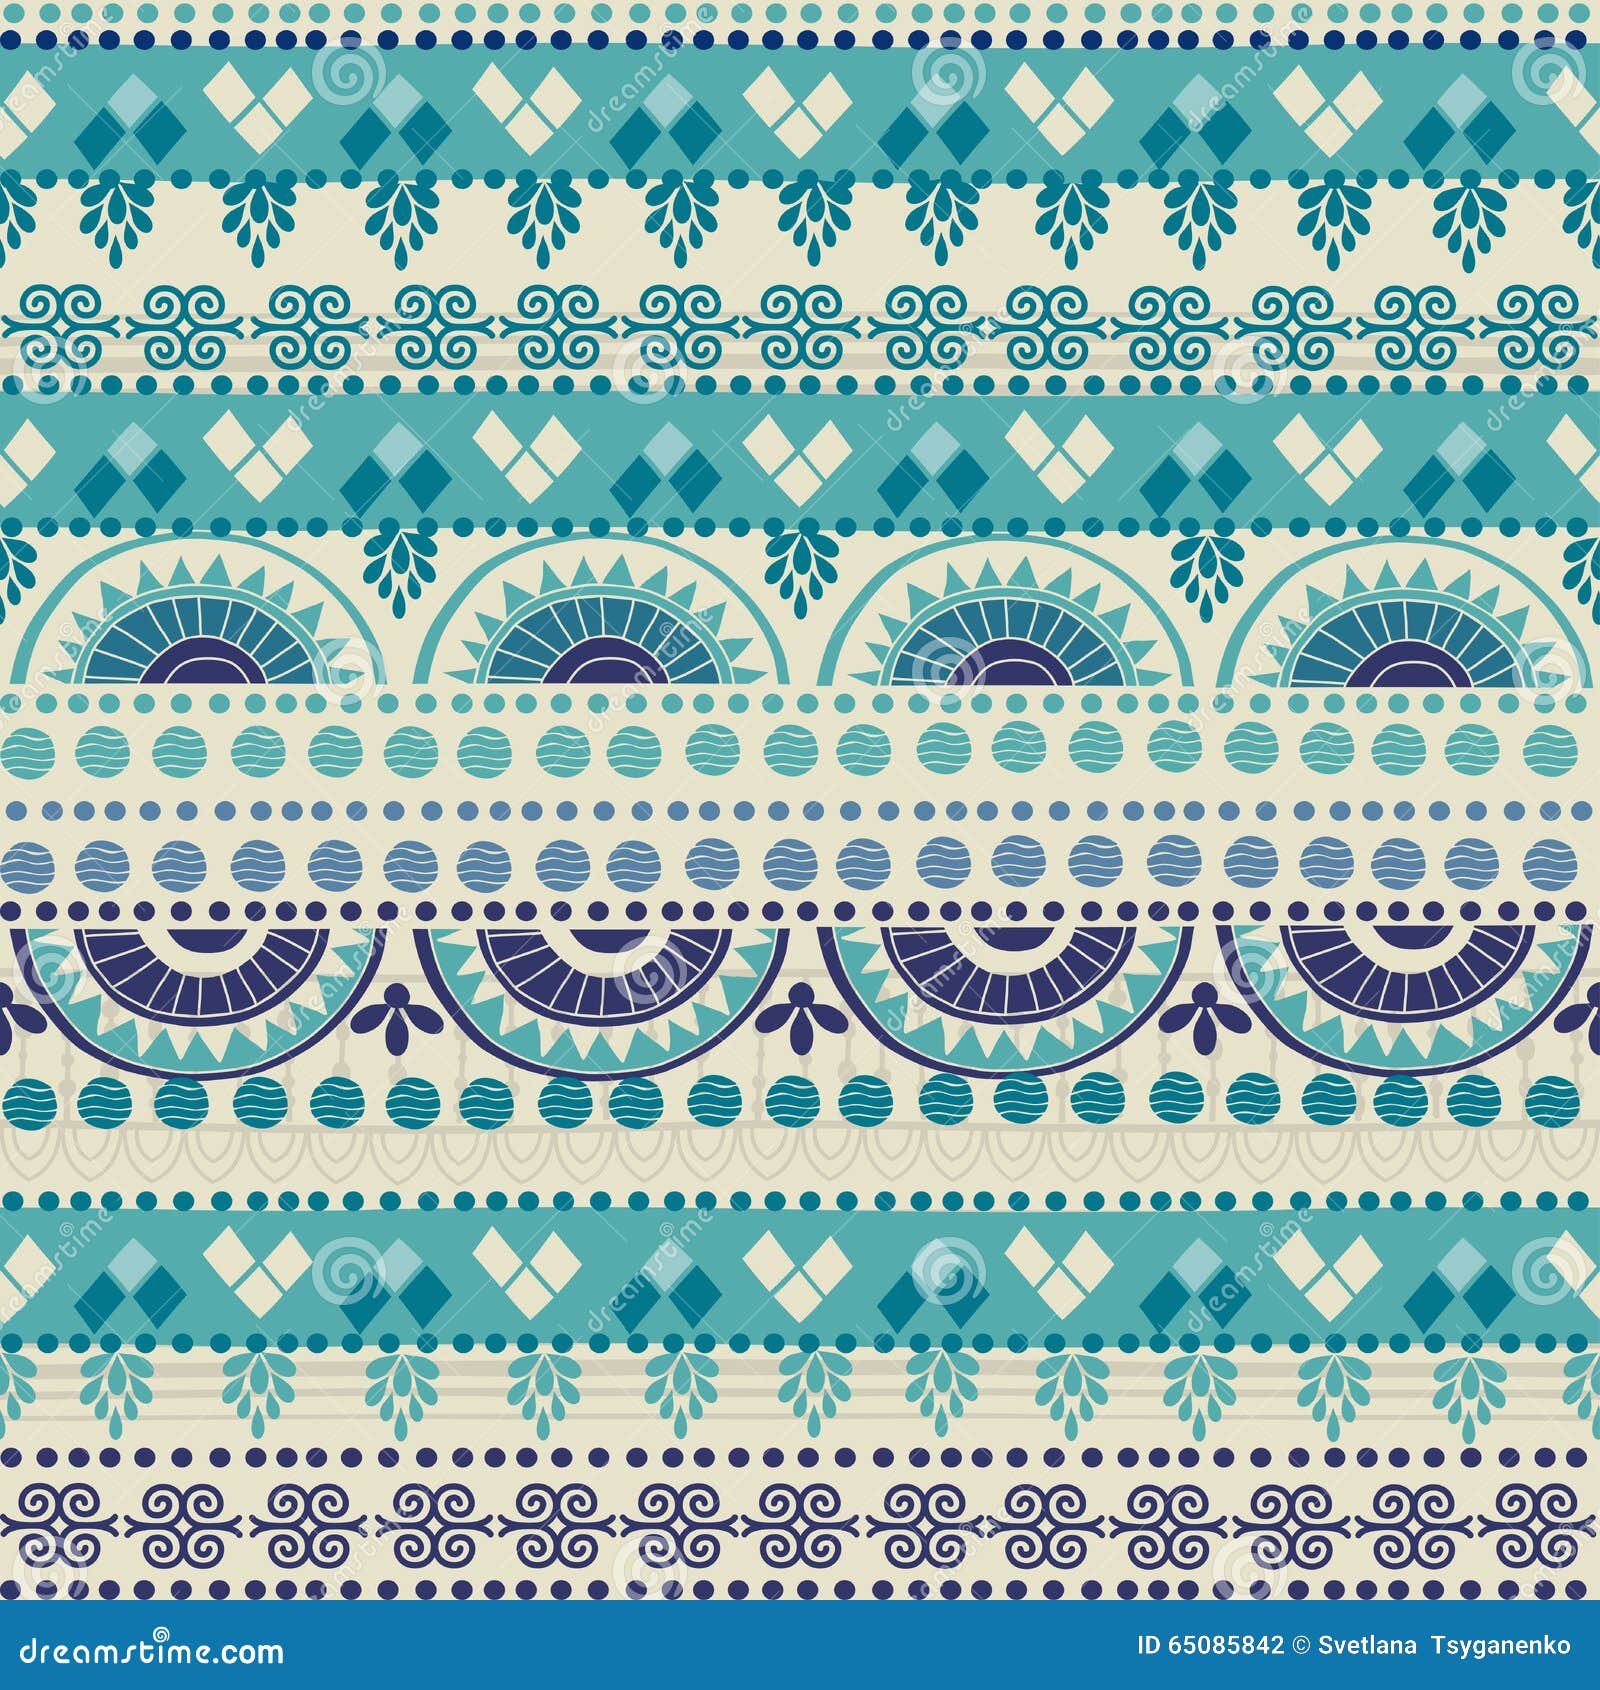 tribal seamless pattern.